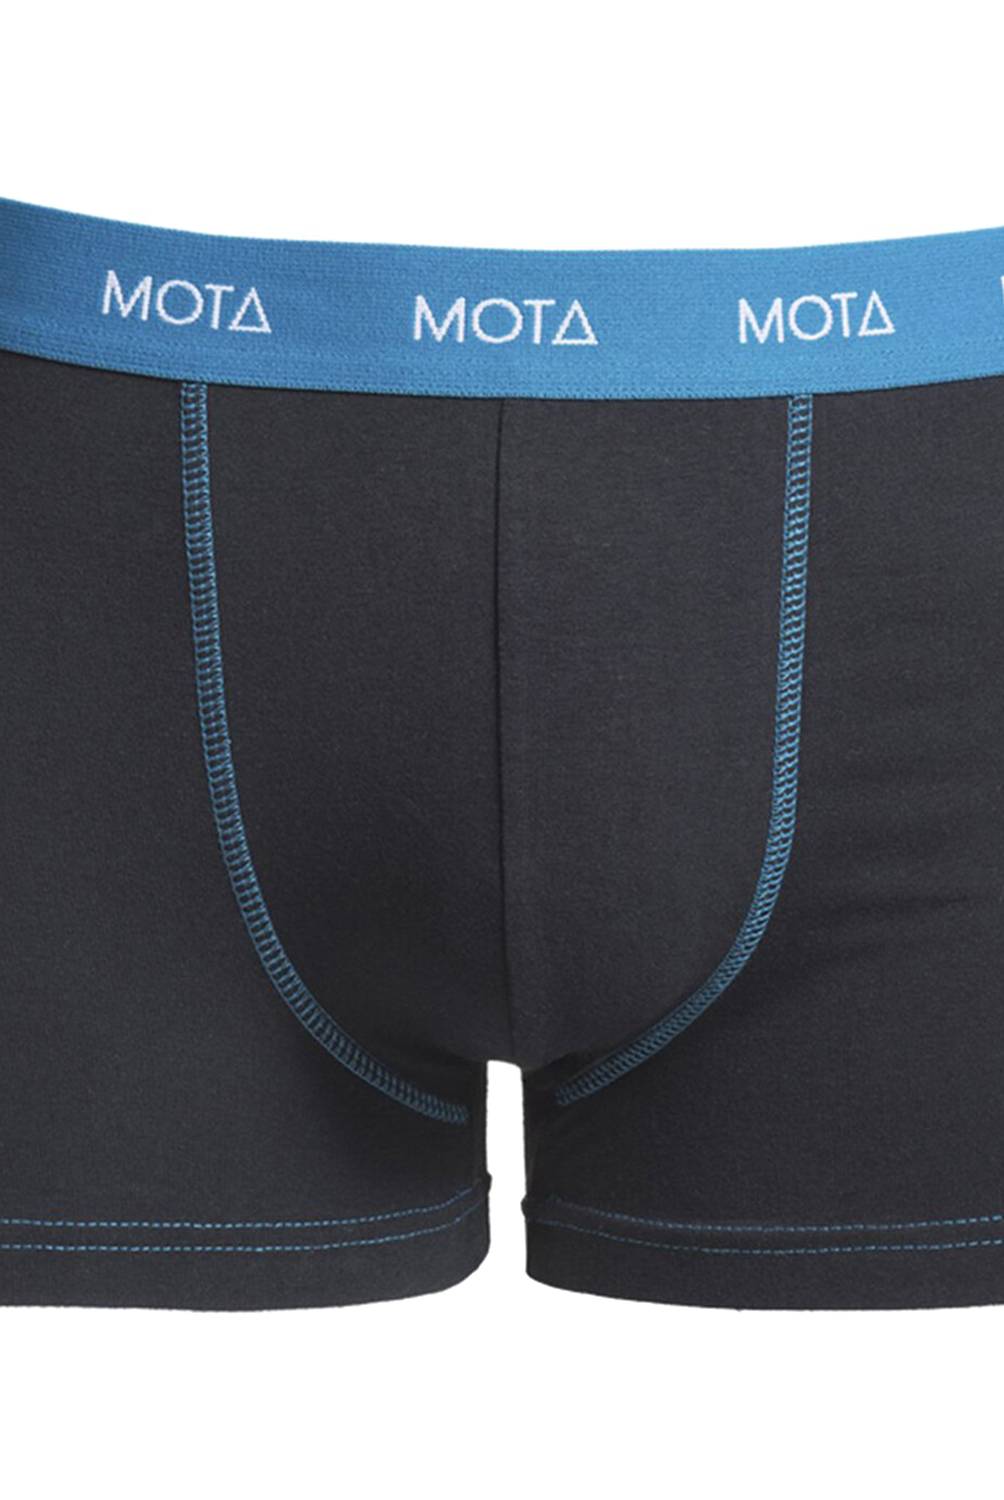 MOTA - Boxer Corto Algodon Mota Pack 3